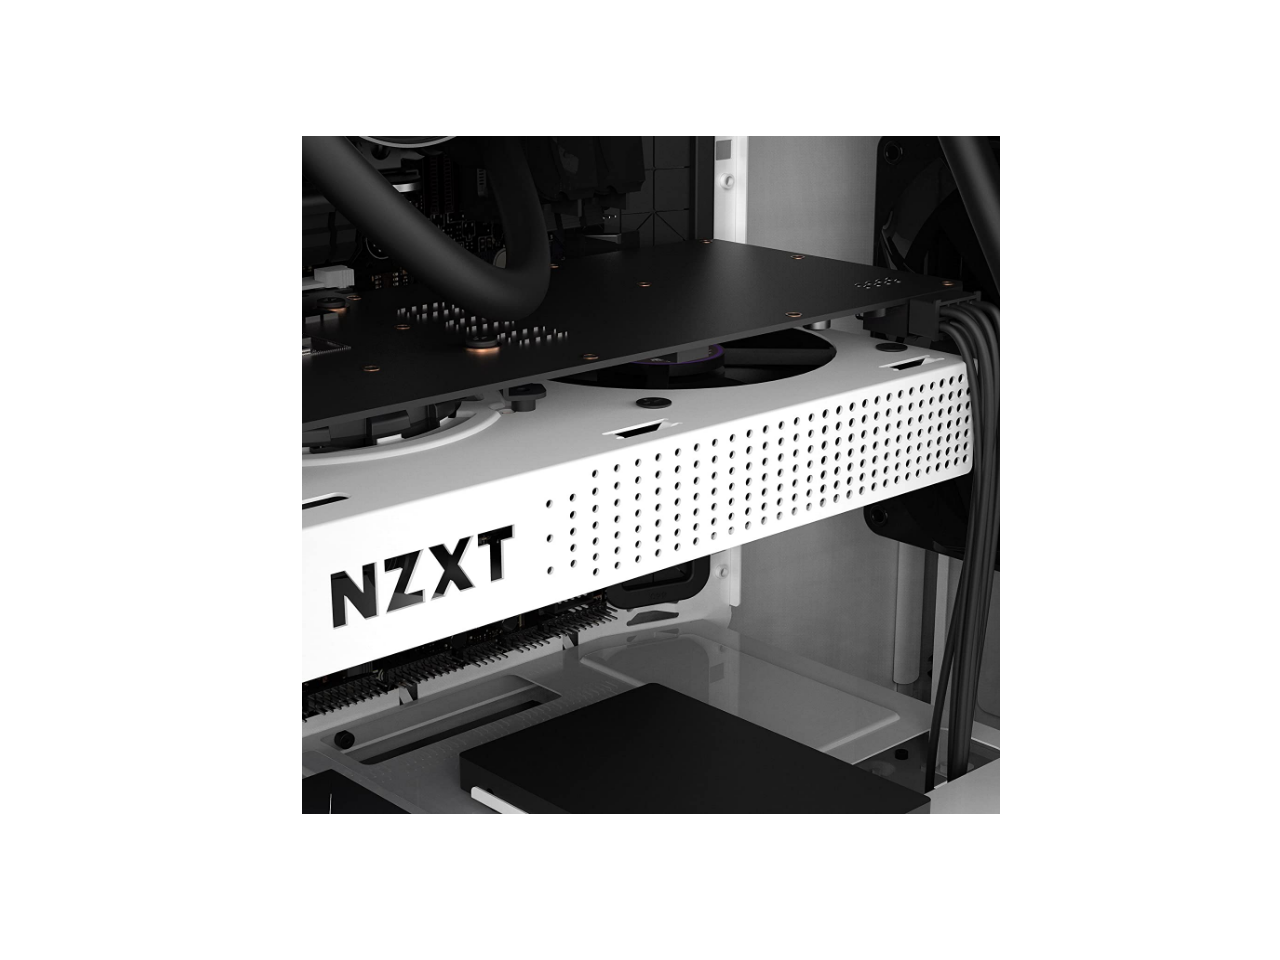 NZXT Kraken G12 GPU Mounting Kit for Kraken X Series AIO with Kraken 280mm - RL-KRZ63-01 - AIO RGB CPU Liquid Cooler - Customizable LCD - Improved Pump - Newegg.com